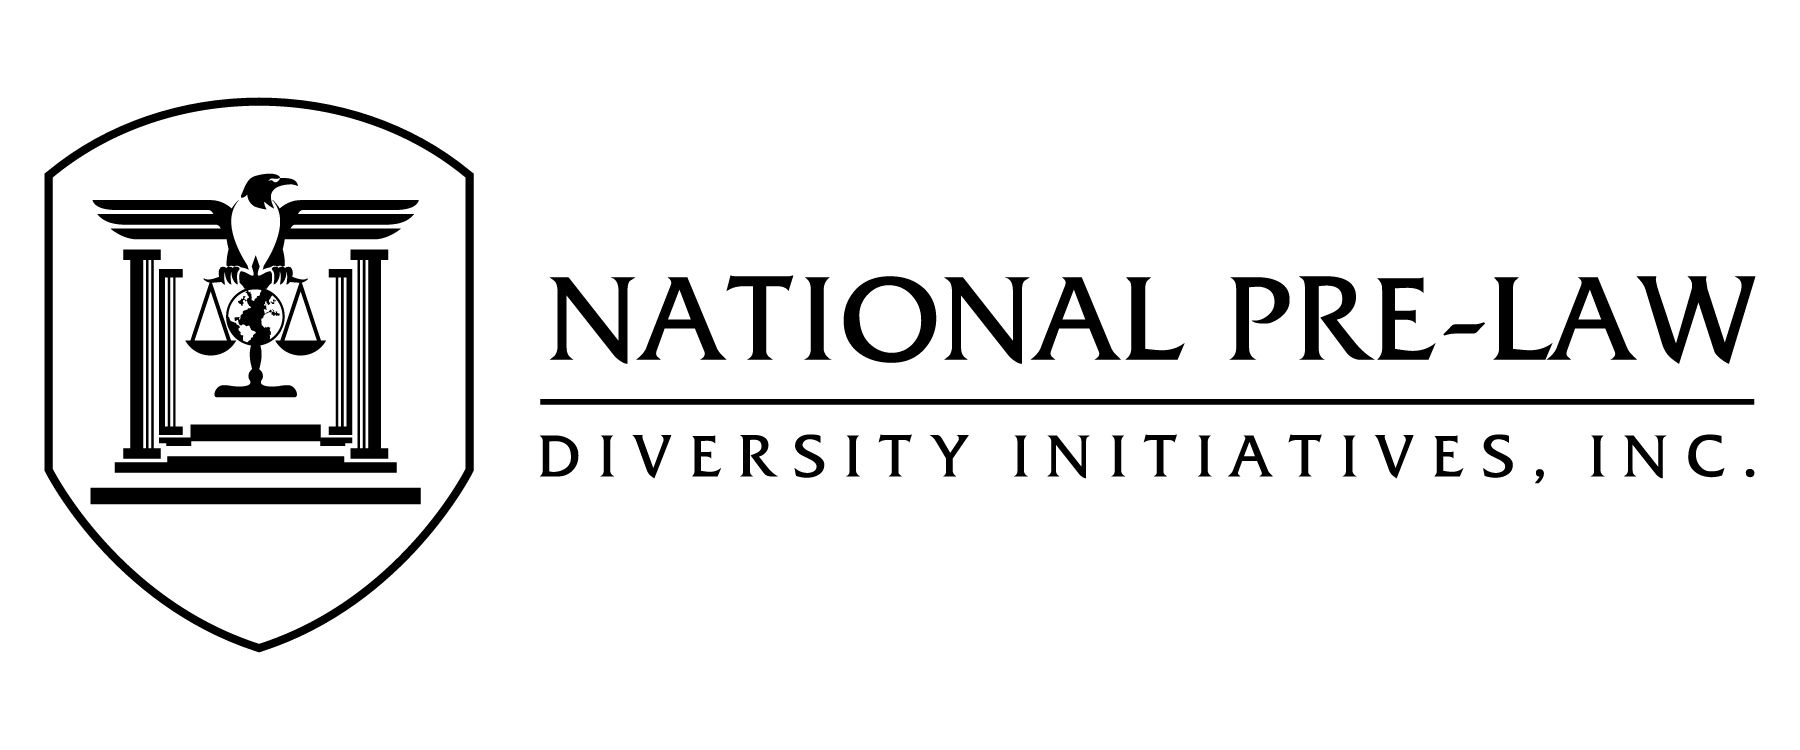 National Pre-Law Diversity Initiatives, Inc. Logo